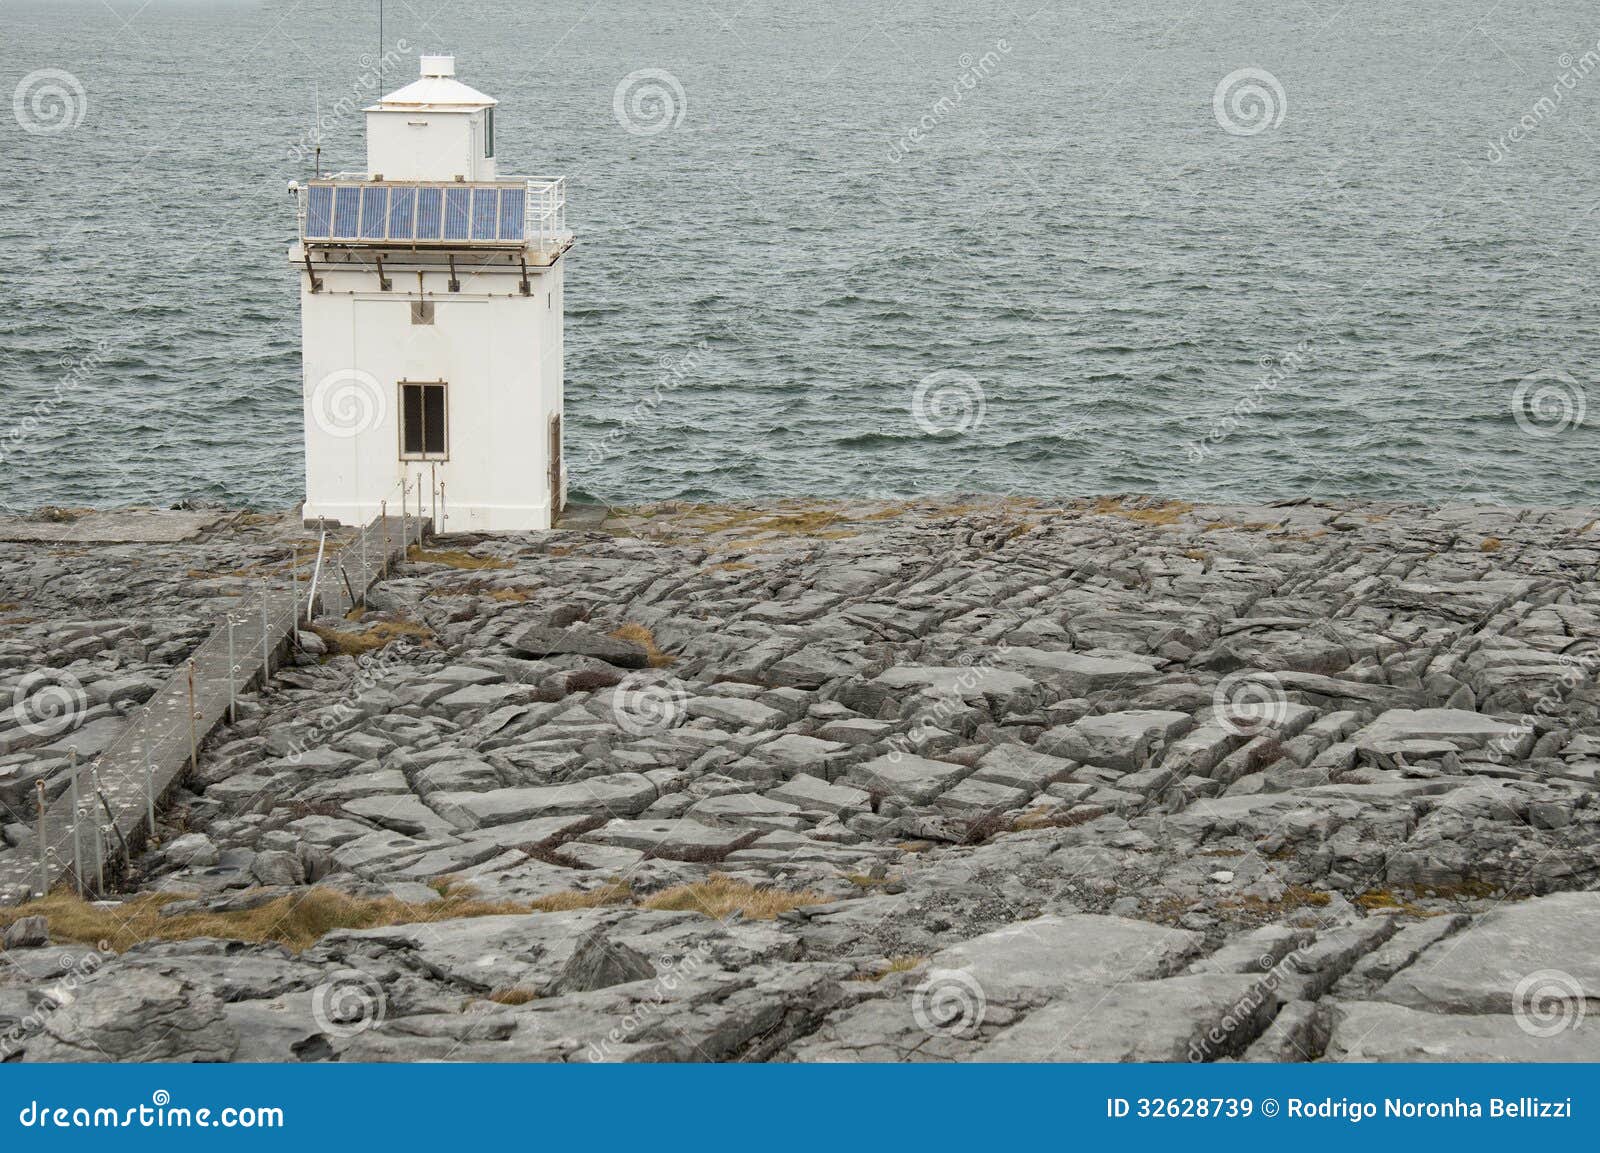 burren lighthouse, co.clare - ireland